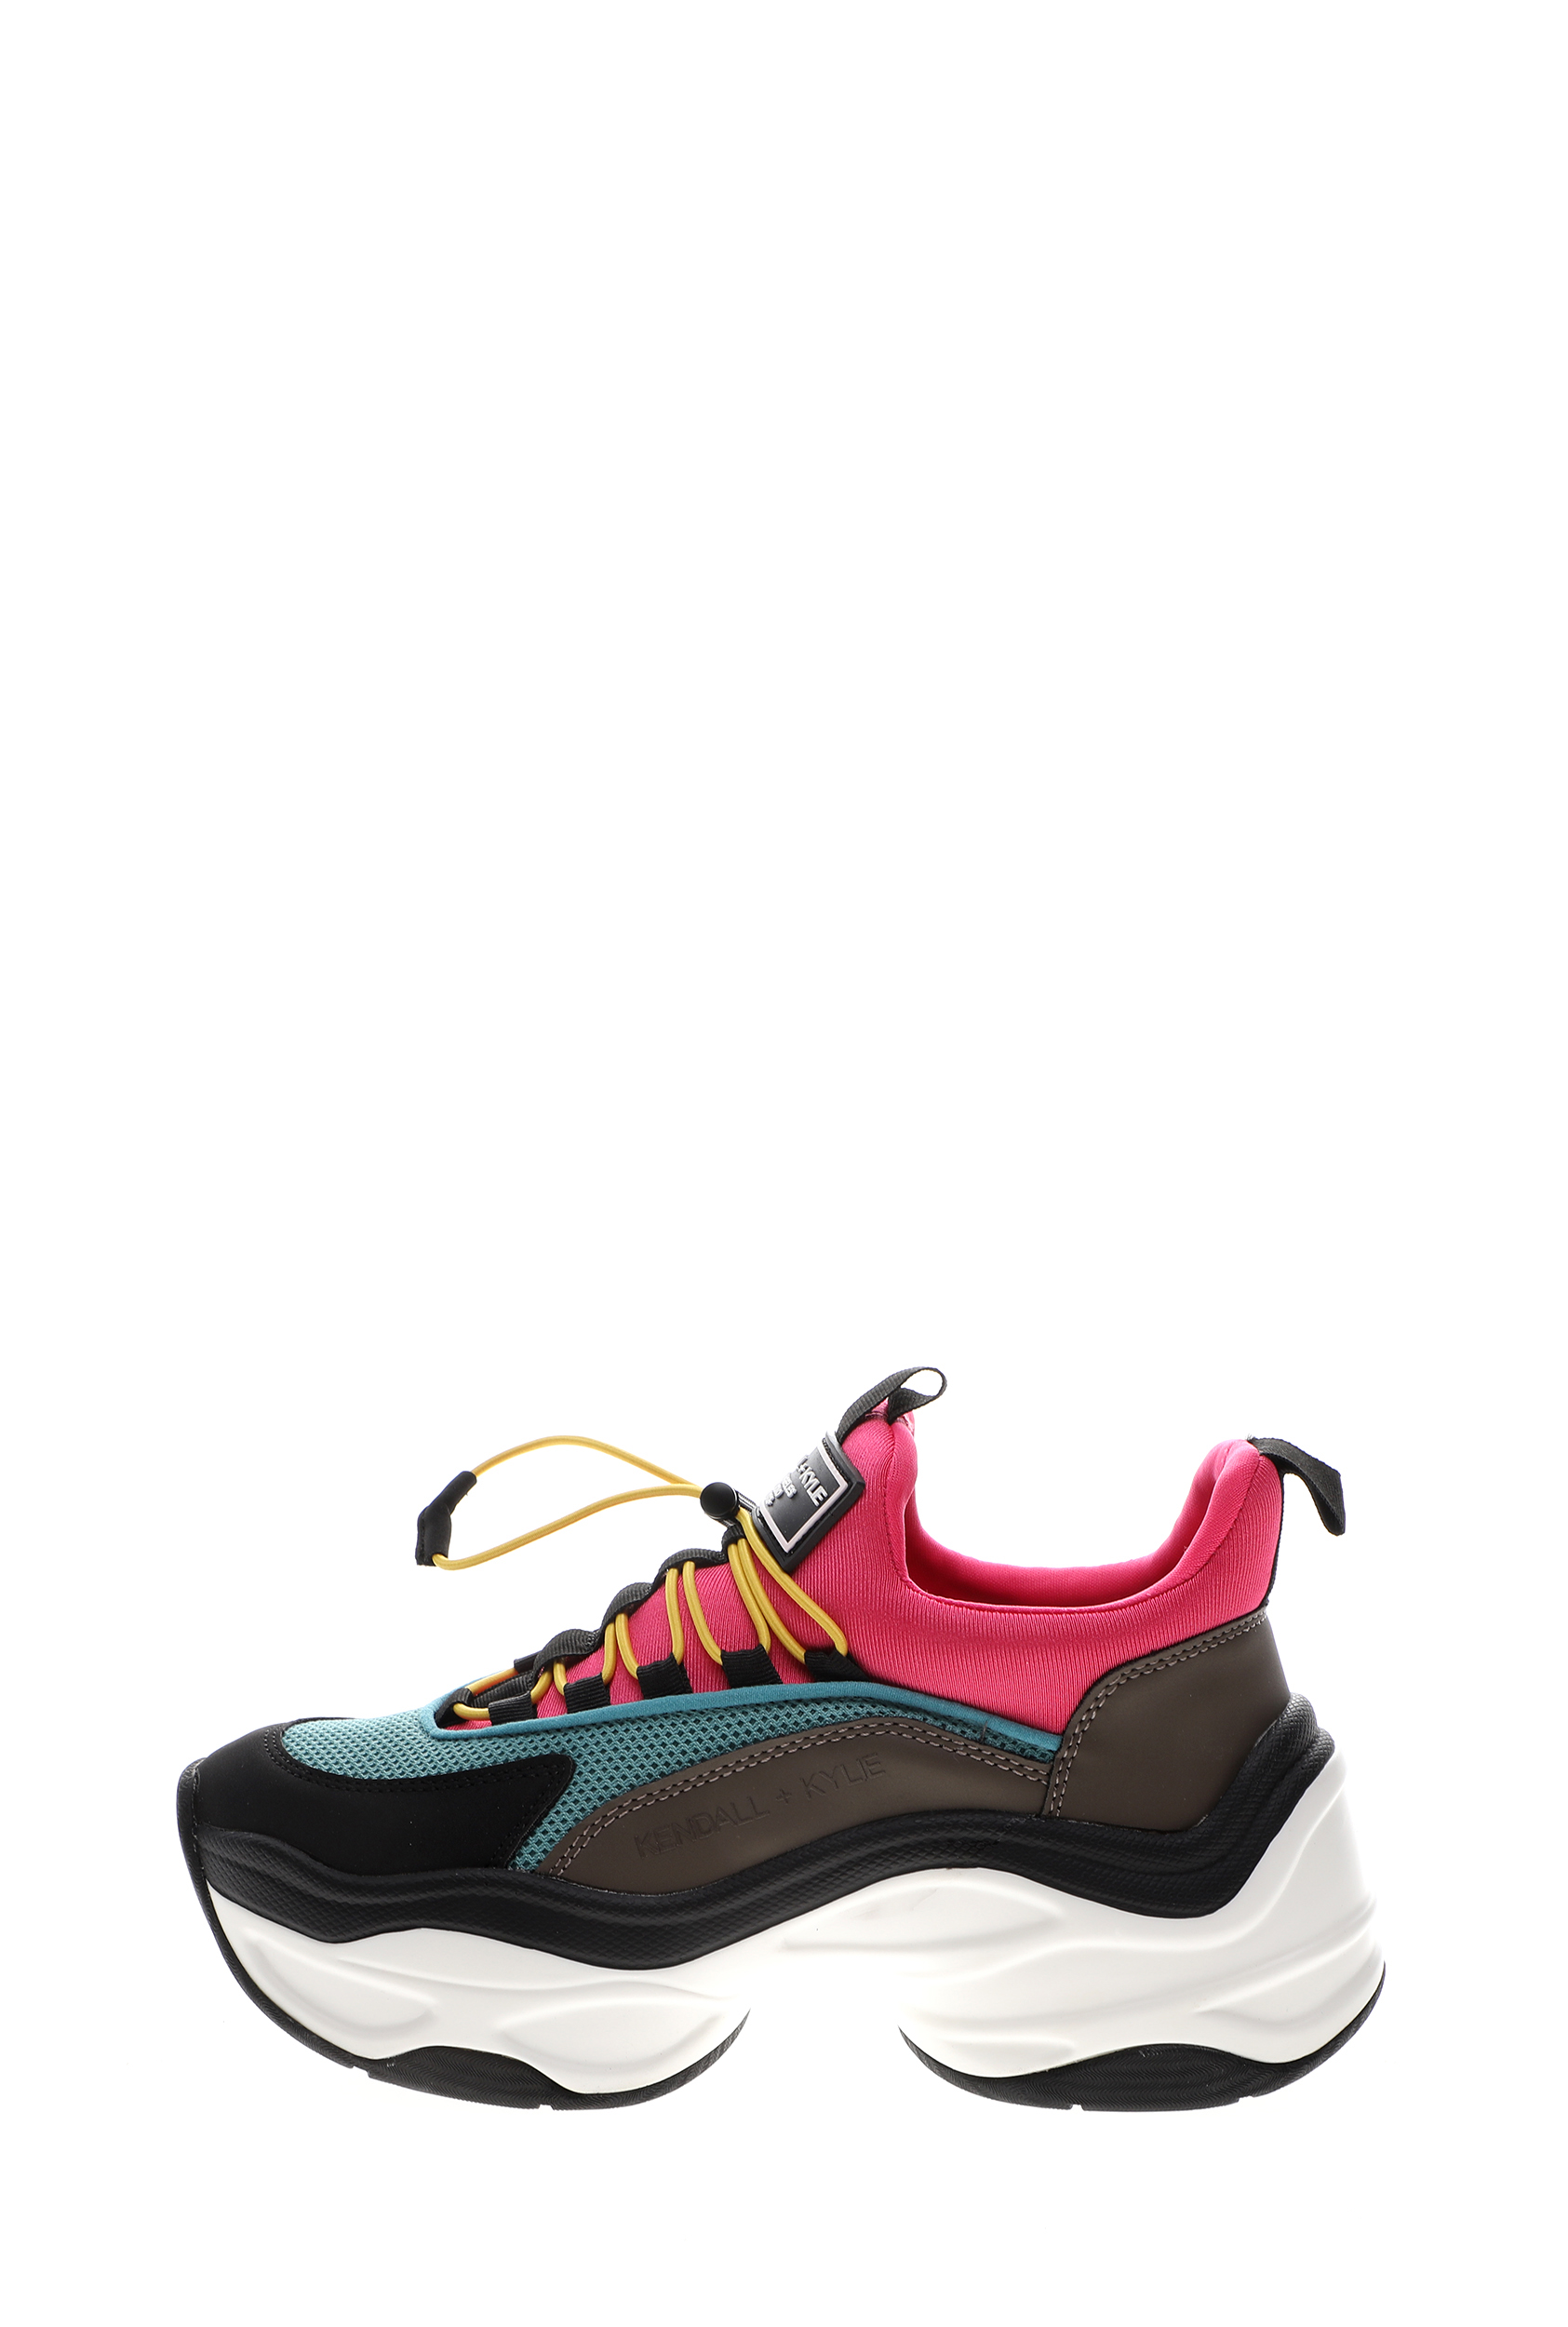 KENDALL+KYLIE – Γυναικεία sneakers KENDALL+KYLIE πολύχρωμα